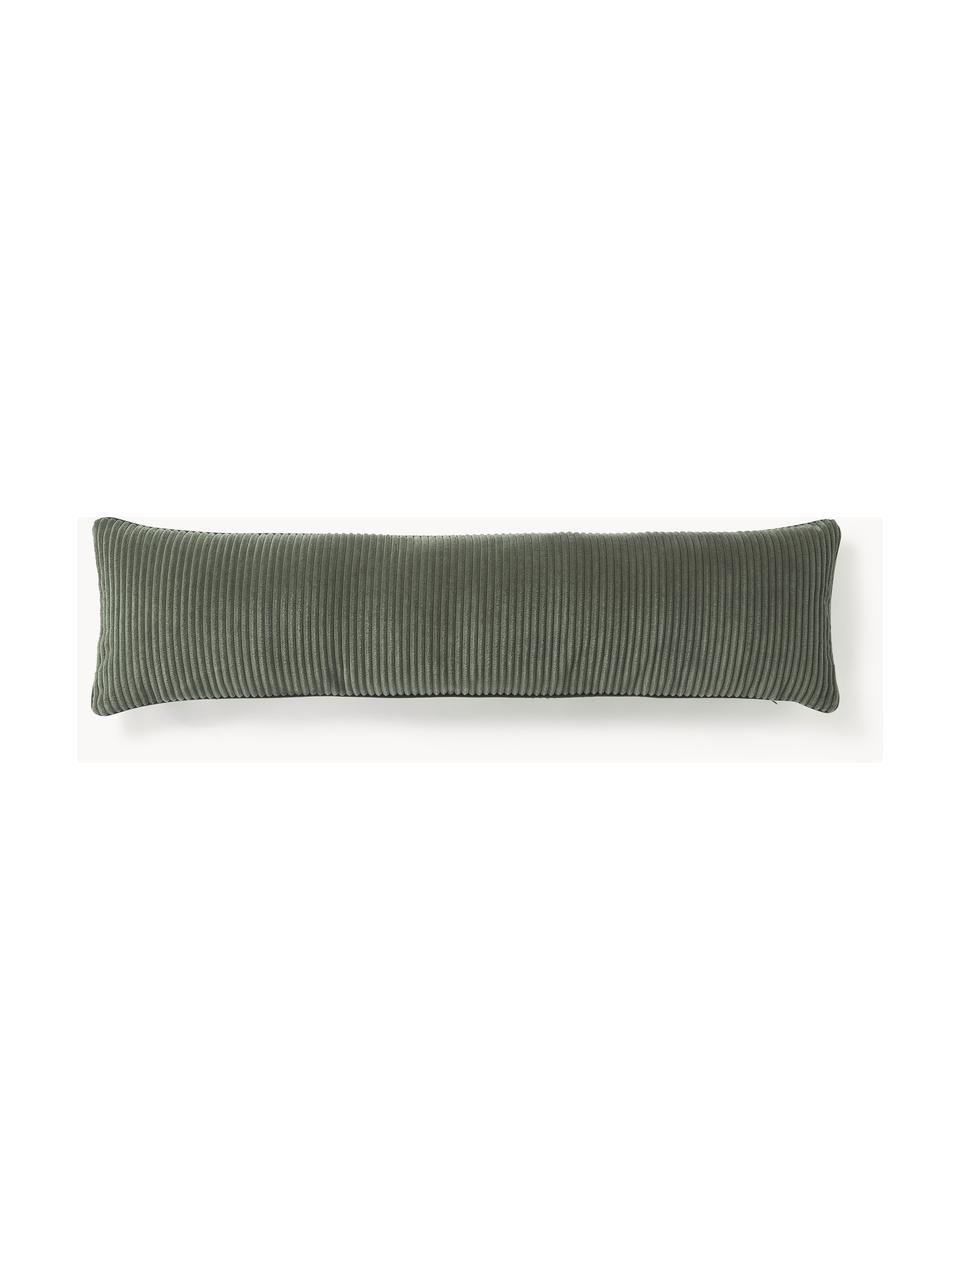 Poduszka ze sztruksu XL Kylen, Oliwkowy zielony, S 30 x D 115 cm